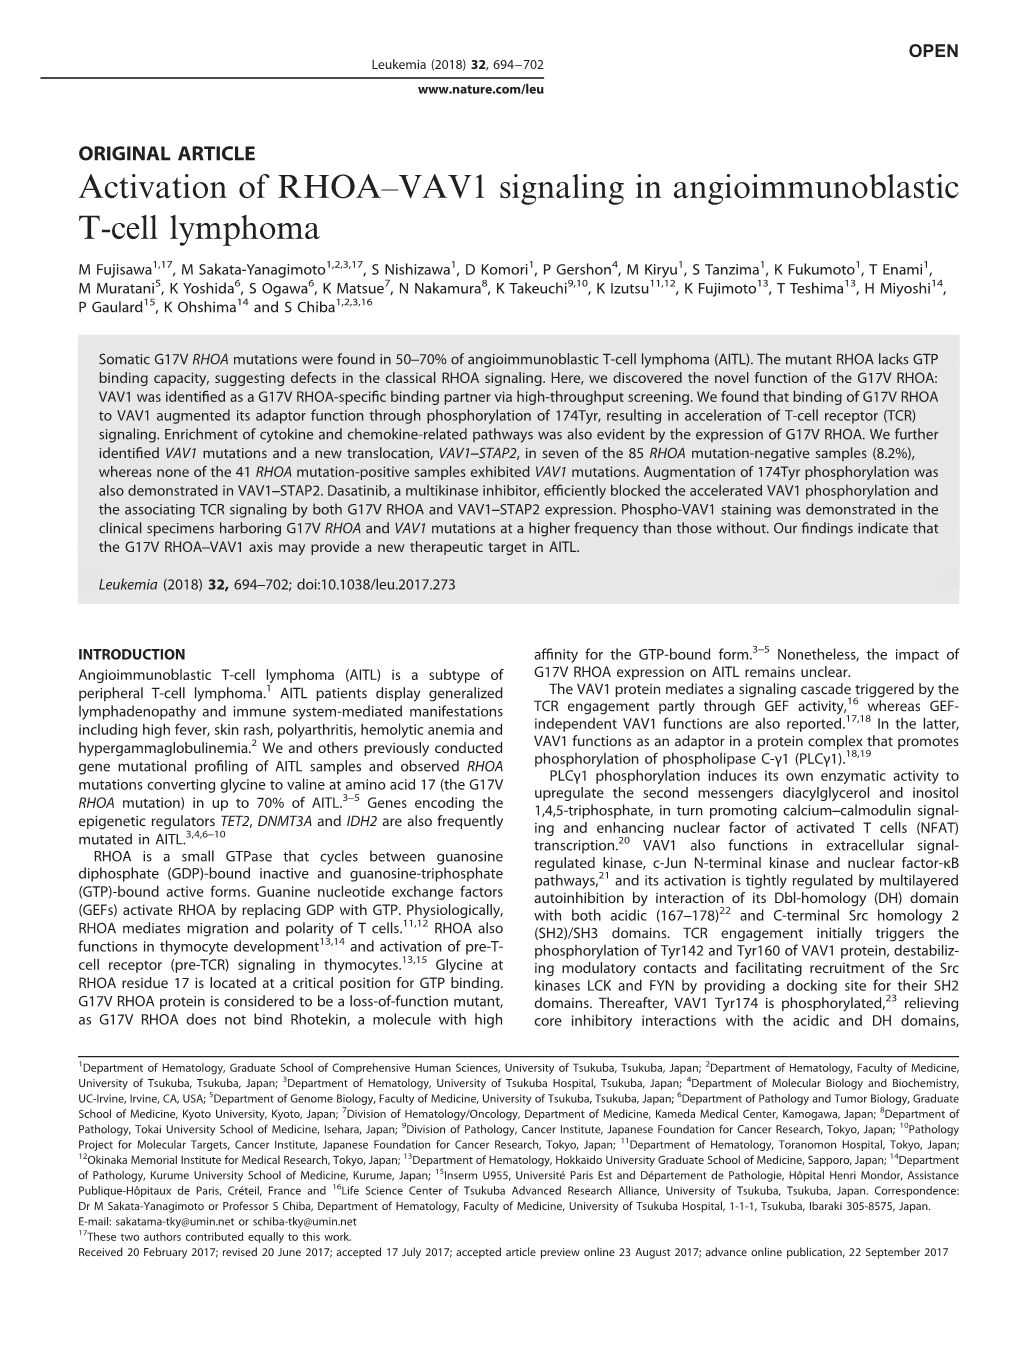 Activation of RHOA–VAV1 Signaling in Angioimmunoblastic T-Cell Lymphoma